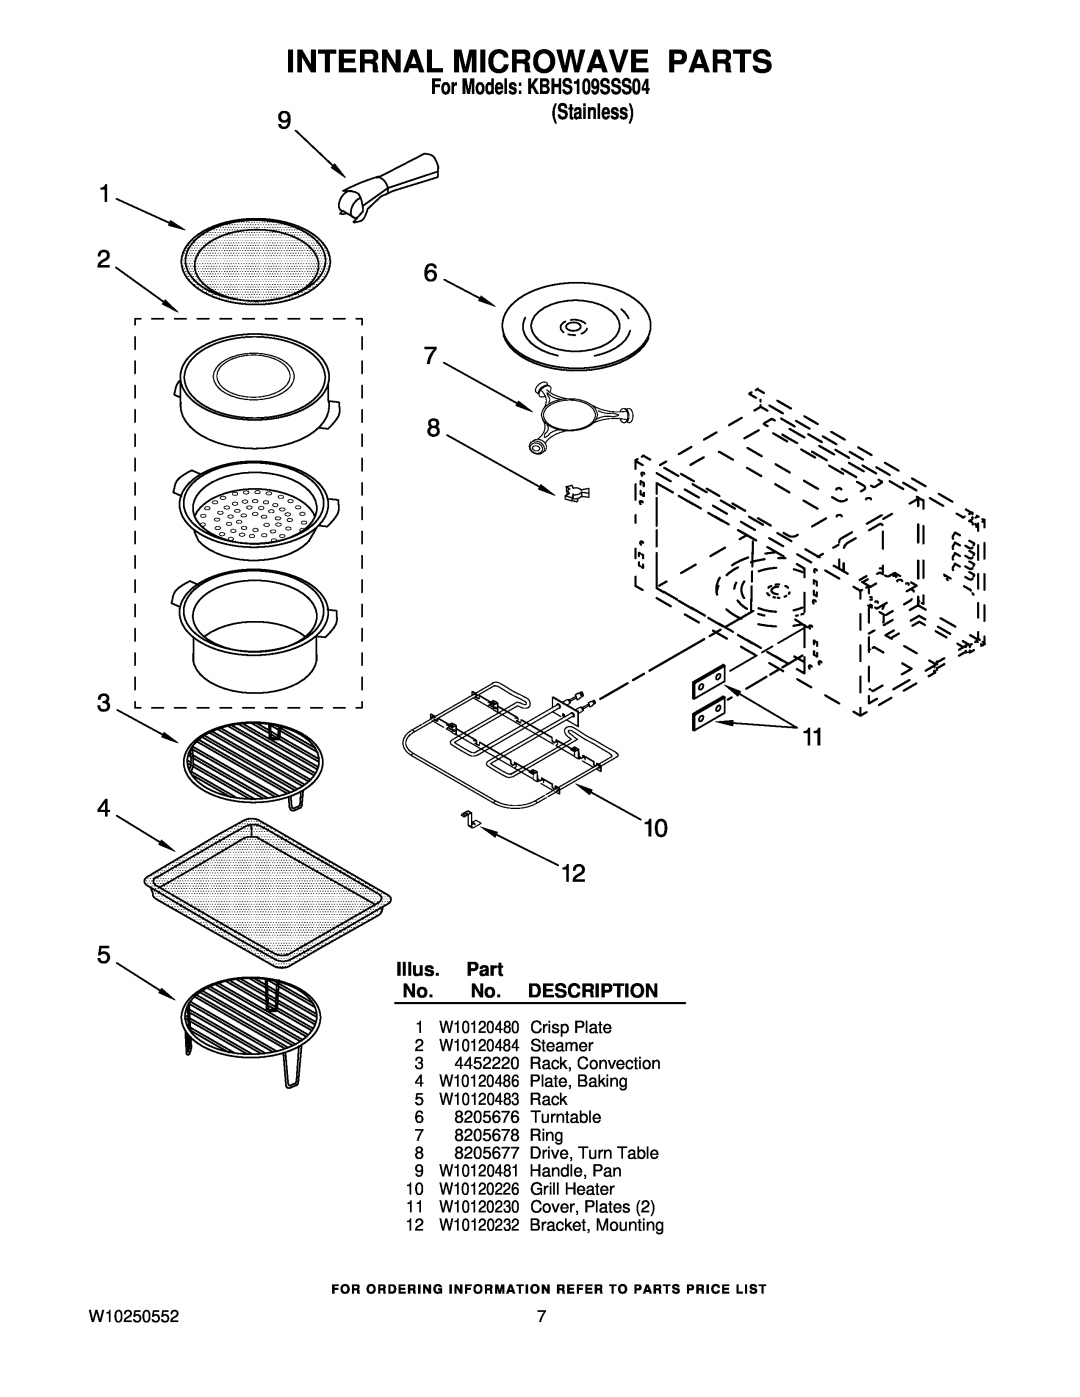 KitchenAid manual Internal Microwave Parts, Illus. Part No. No. DESCRIPTION, For Models KBHS109SSS04 Stainless 